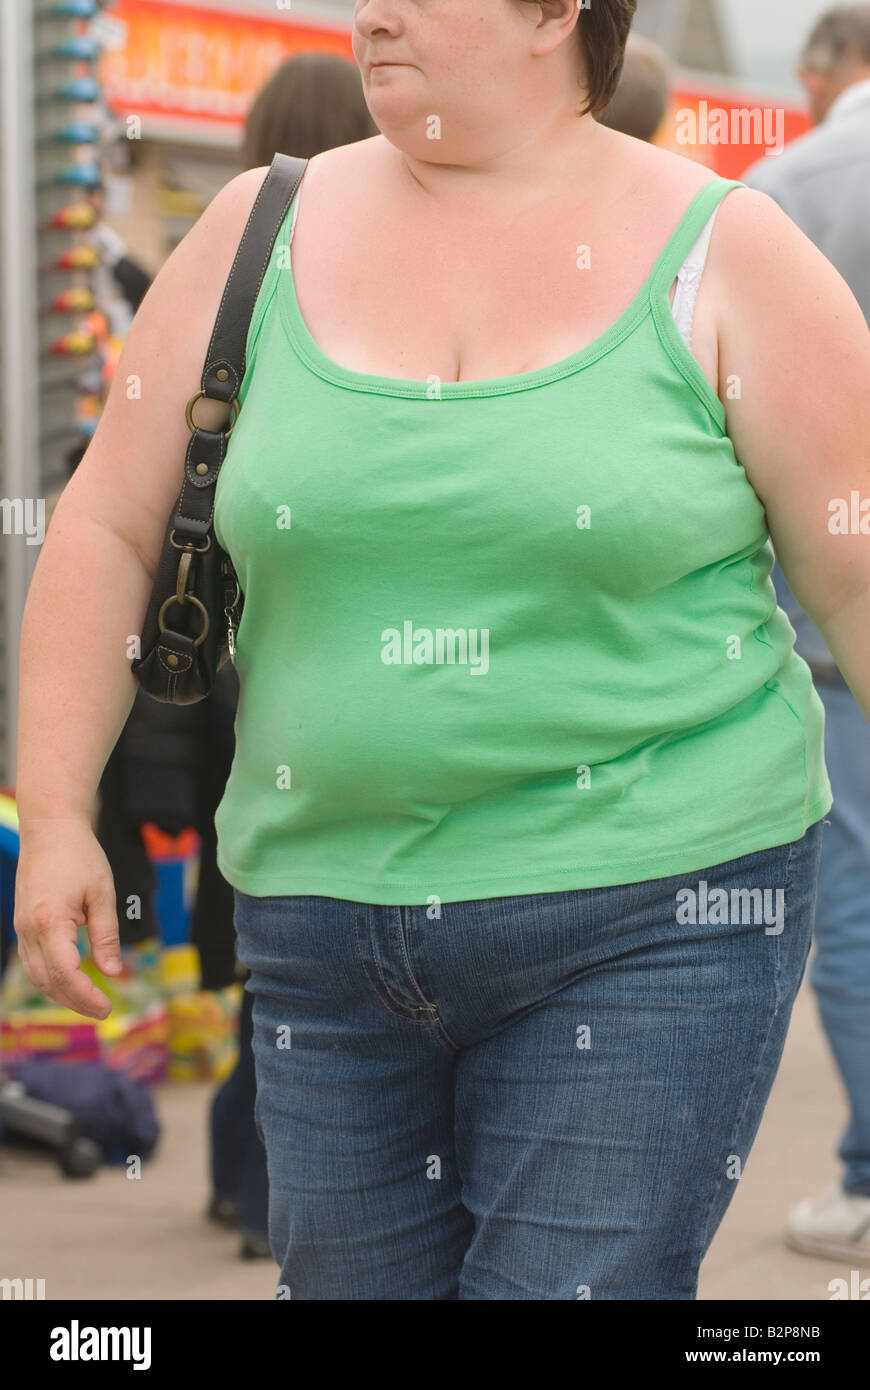 liverpool shirt fat woman